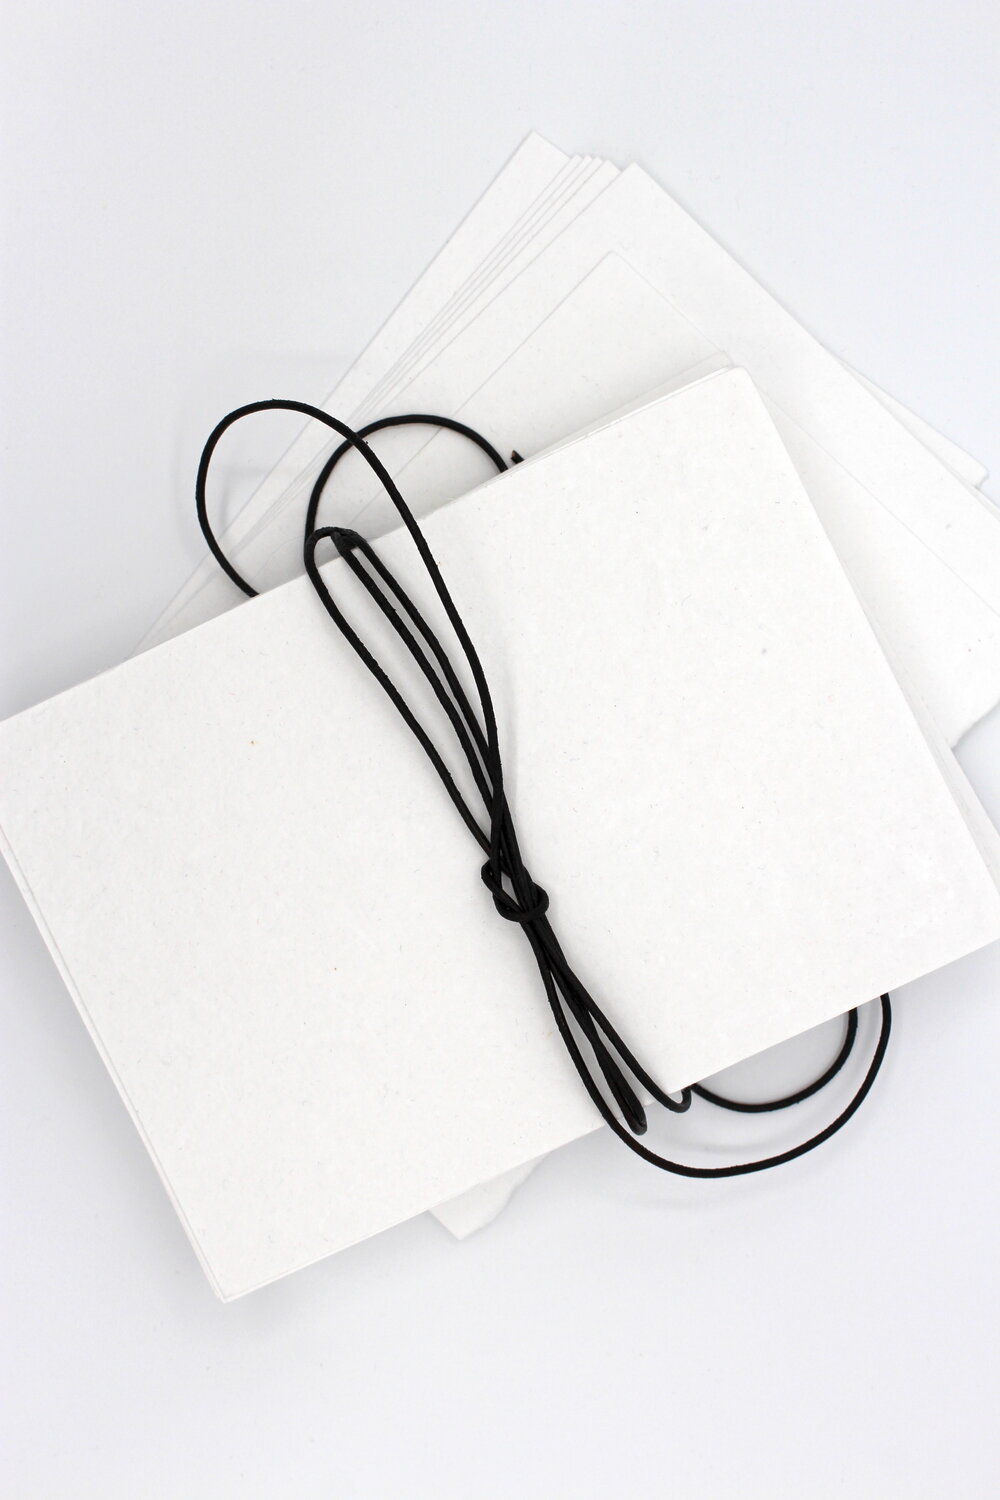 White, 5 x 7, 300 gsm – Deckle edge paper – Indian Cotton Paper Co.